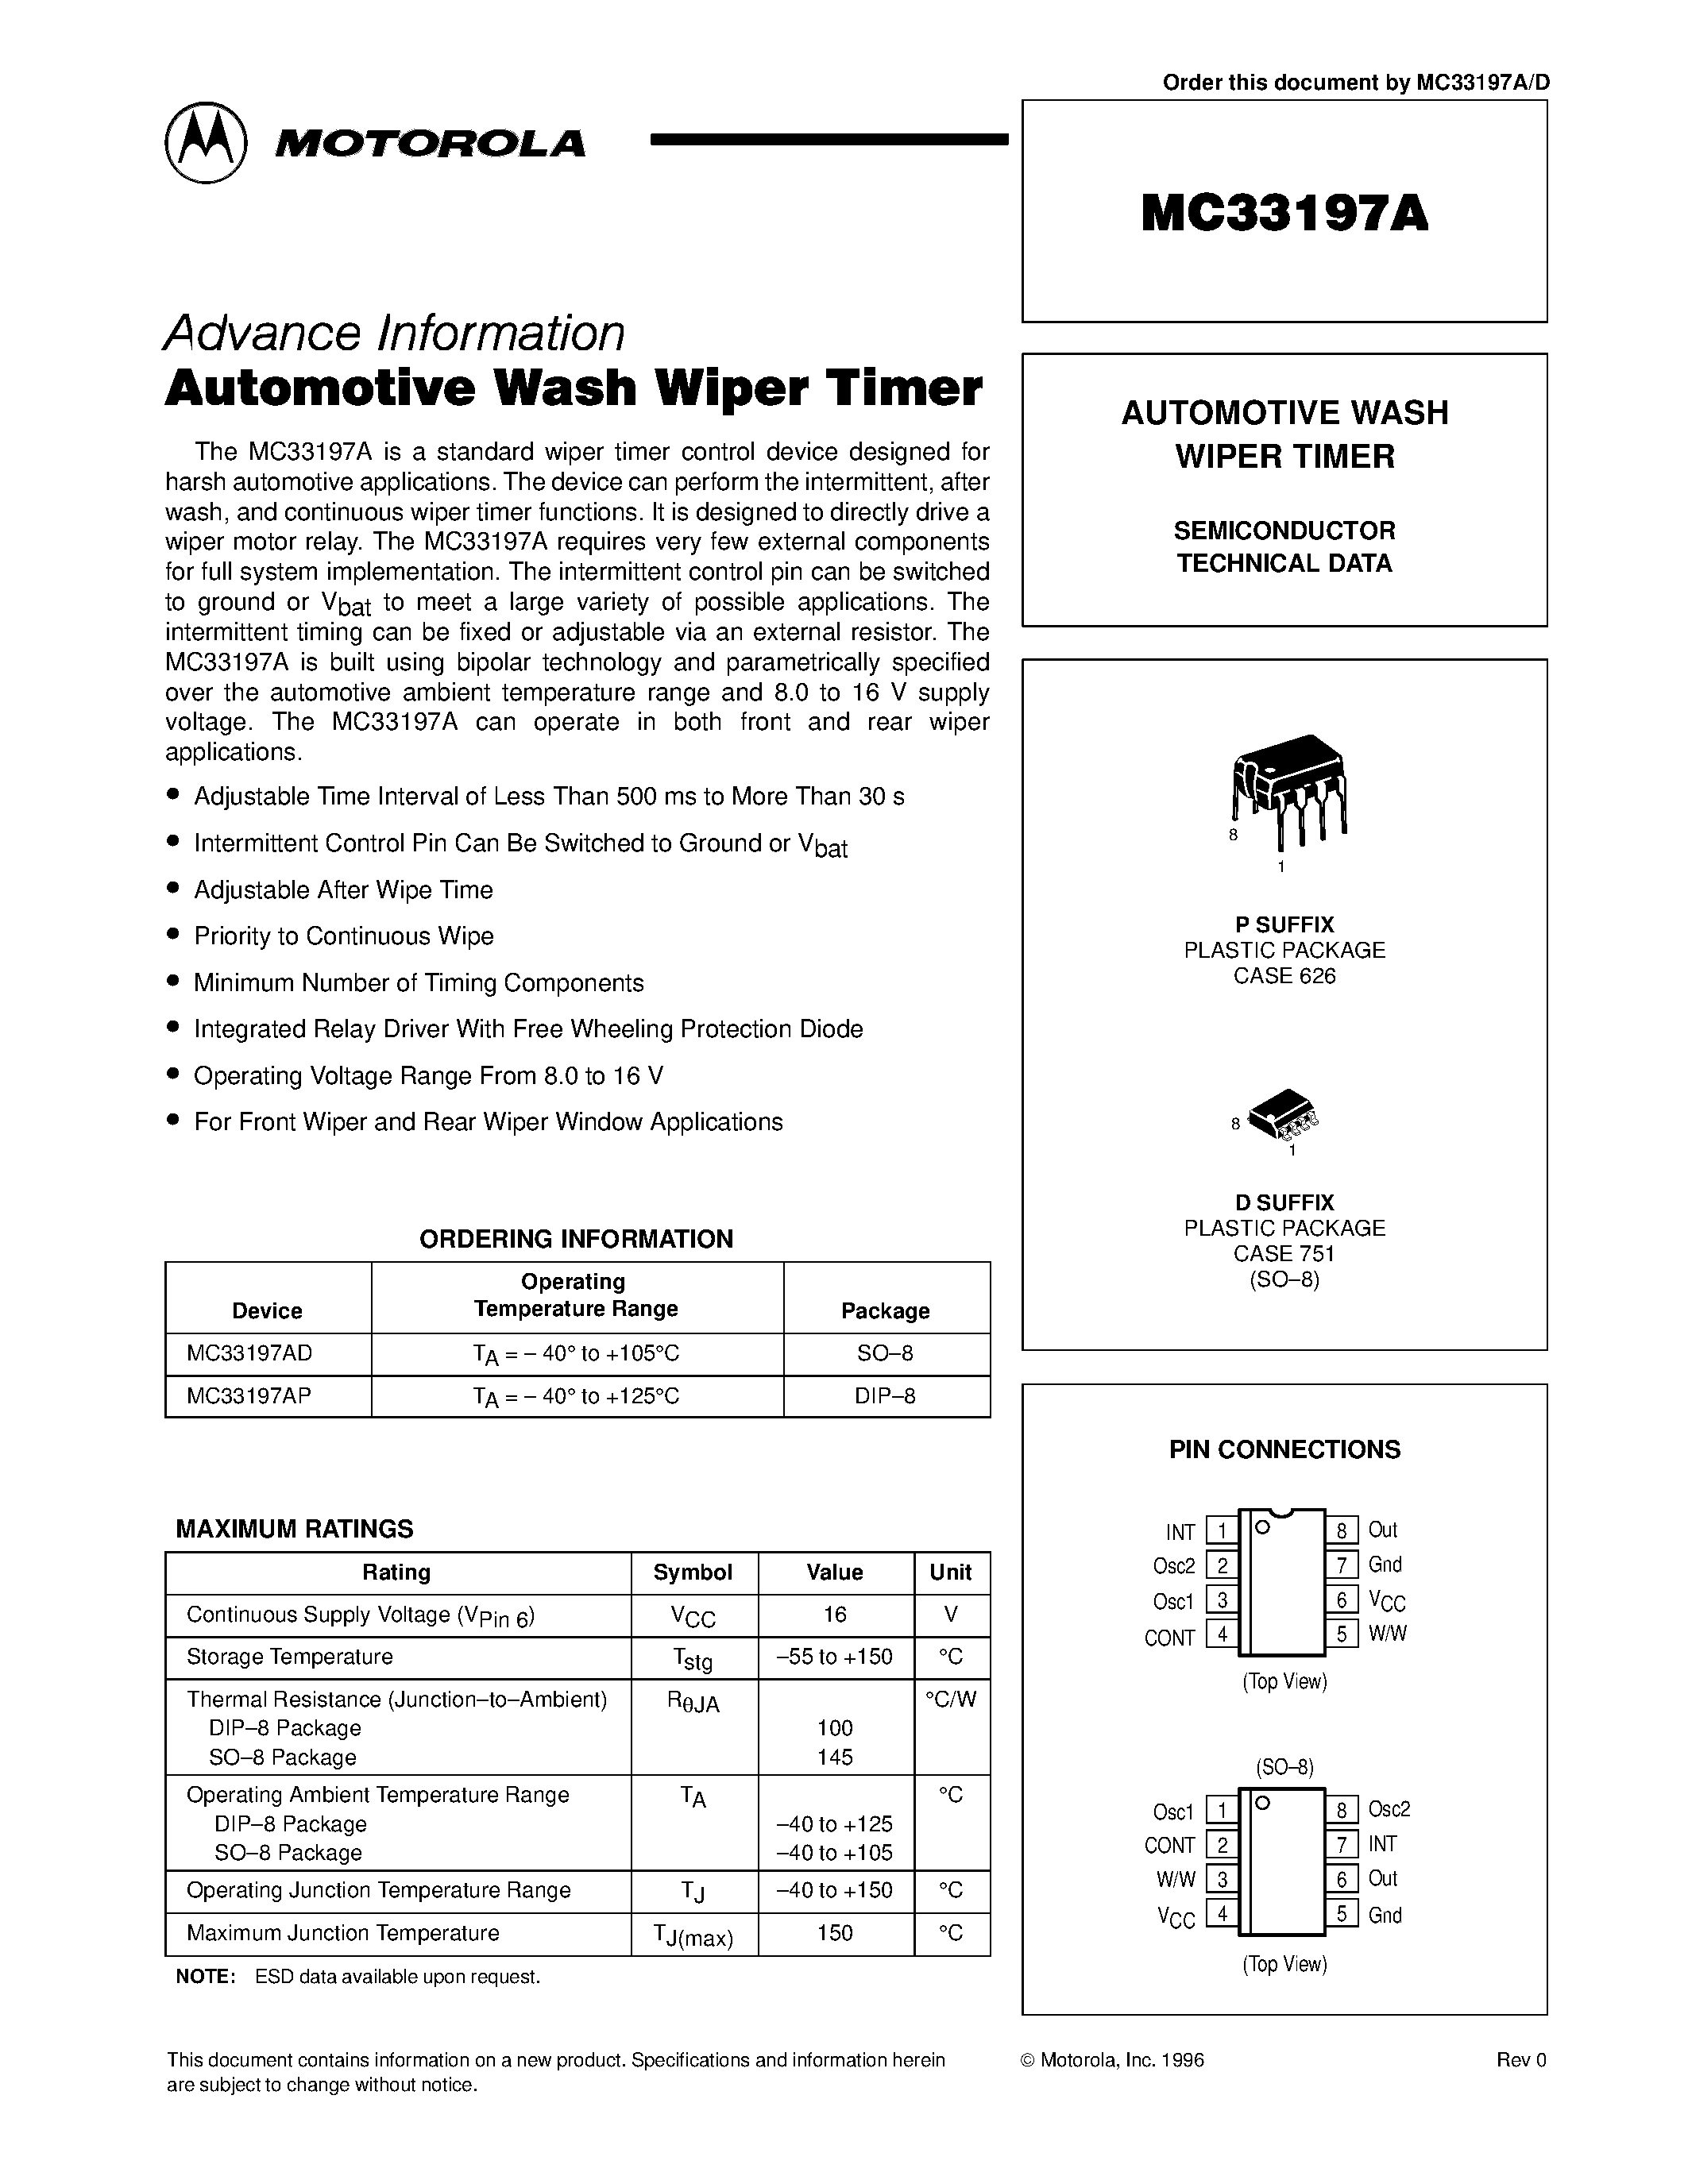 Datasheet MC33197A - AUTOMOTIVE WASH WIPER TIMER page 1